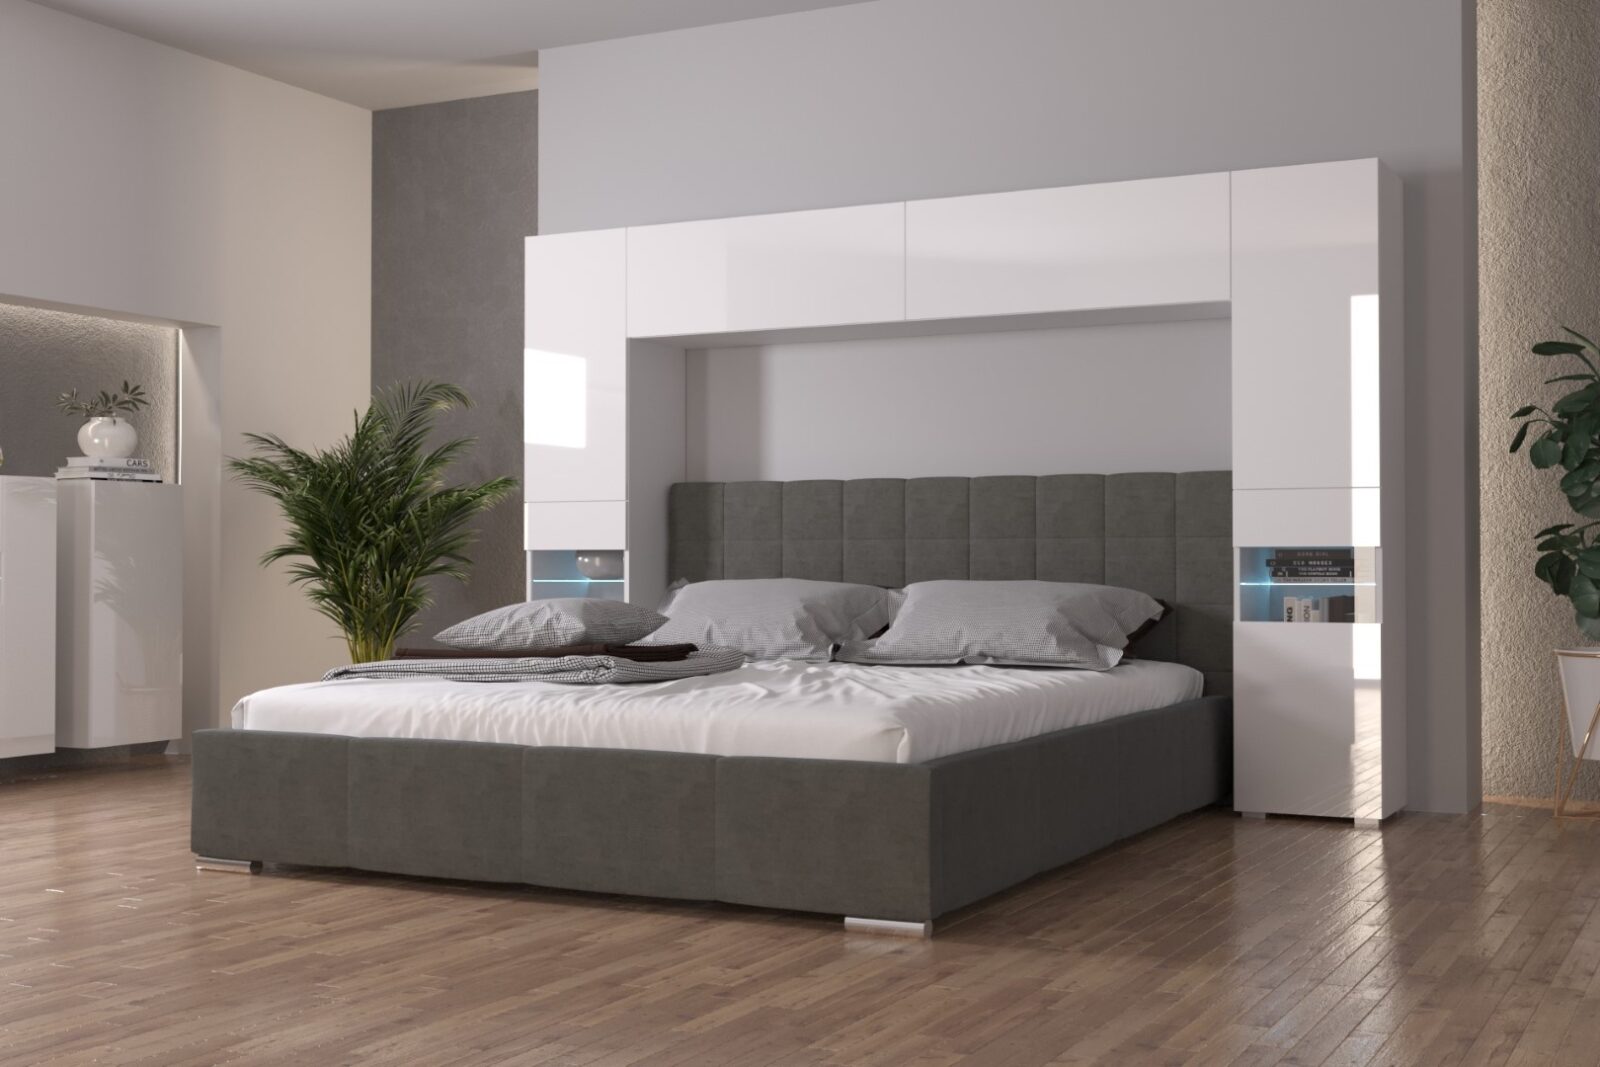 Mueble de dormitorio moderno PANAMA 1 - blanco brillo - 345-385 x 159 »  Confortica